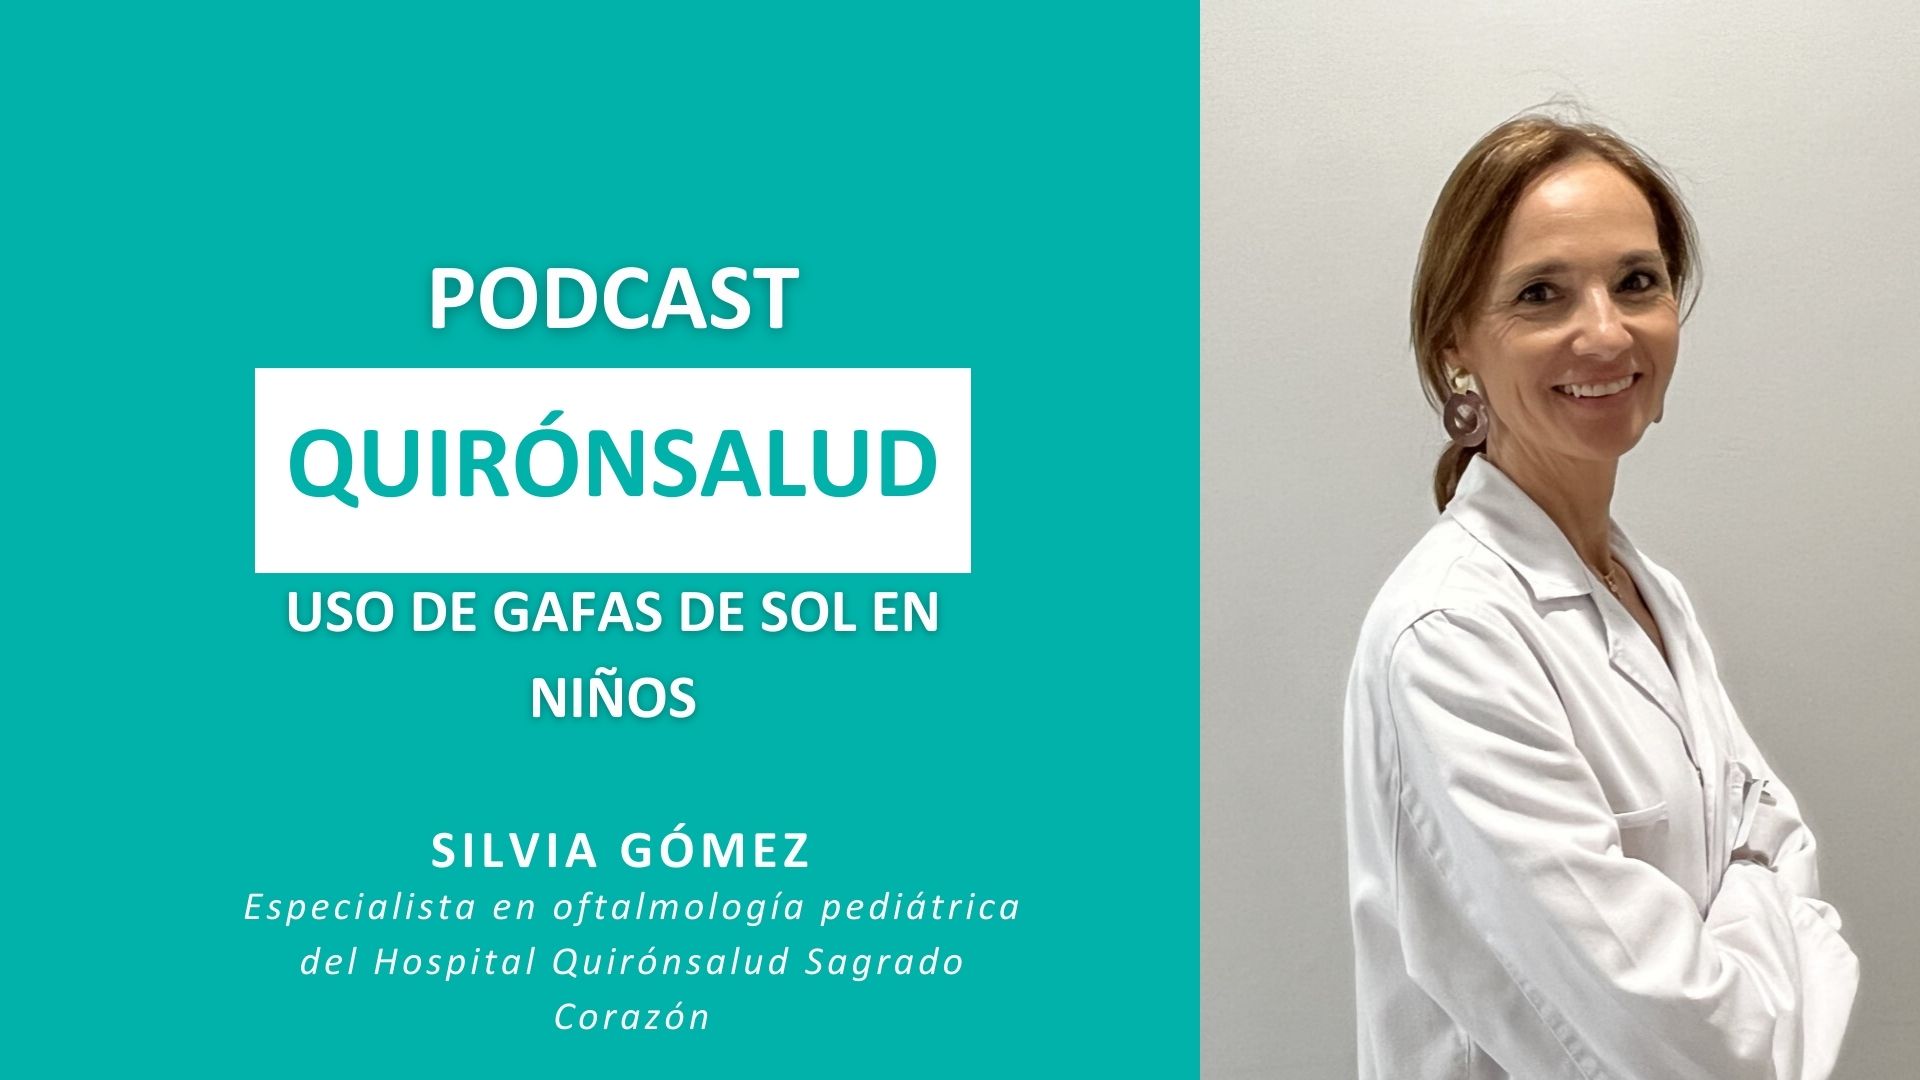 Podcast 2 - SilviaGomez, oftalmóloga